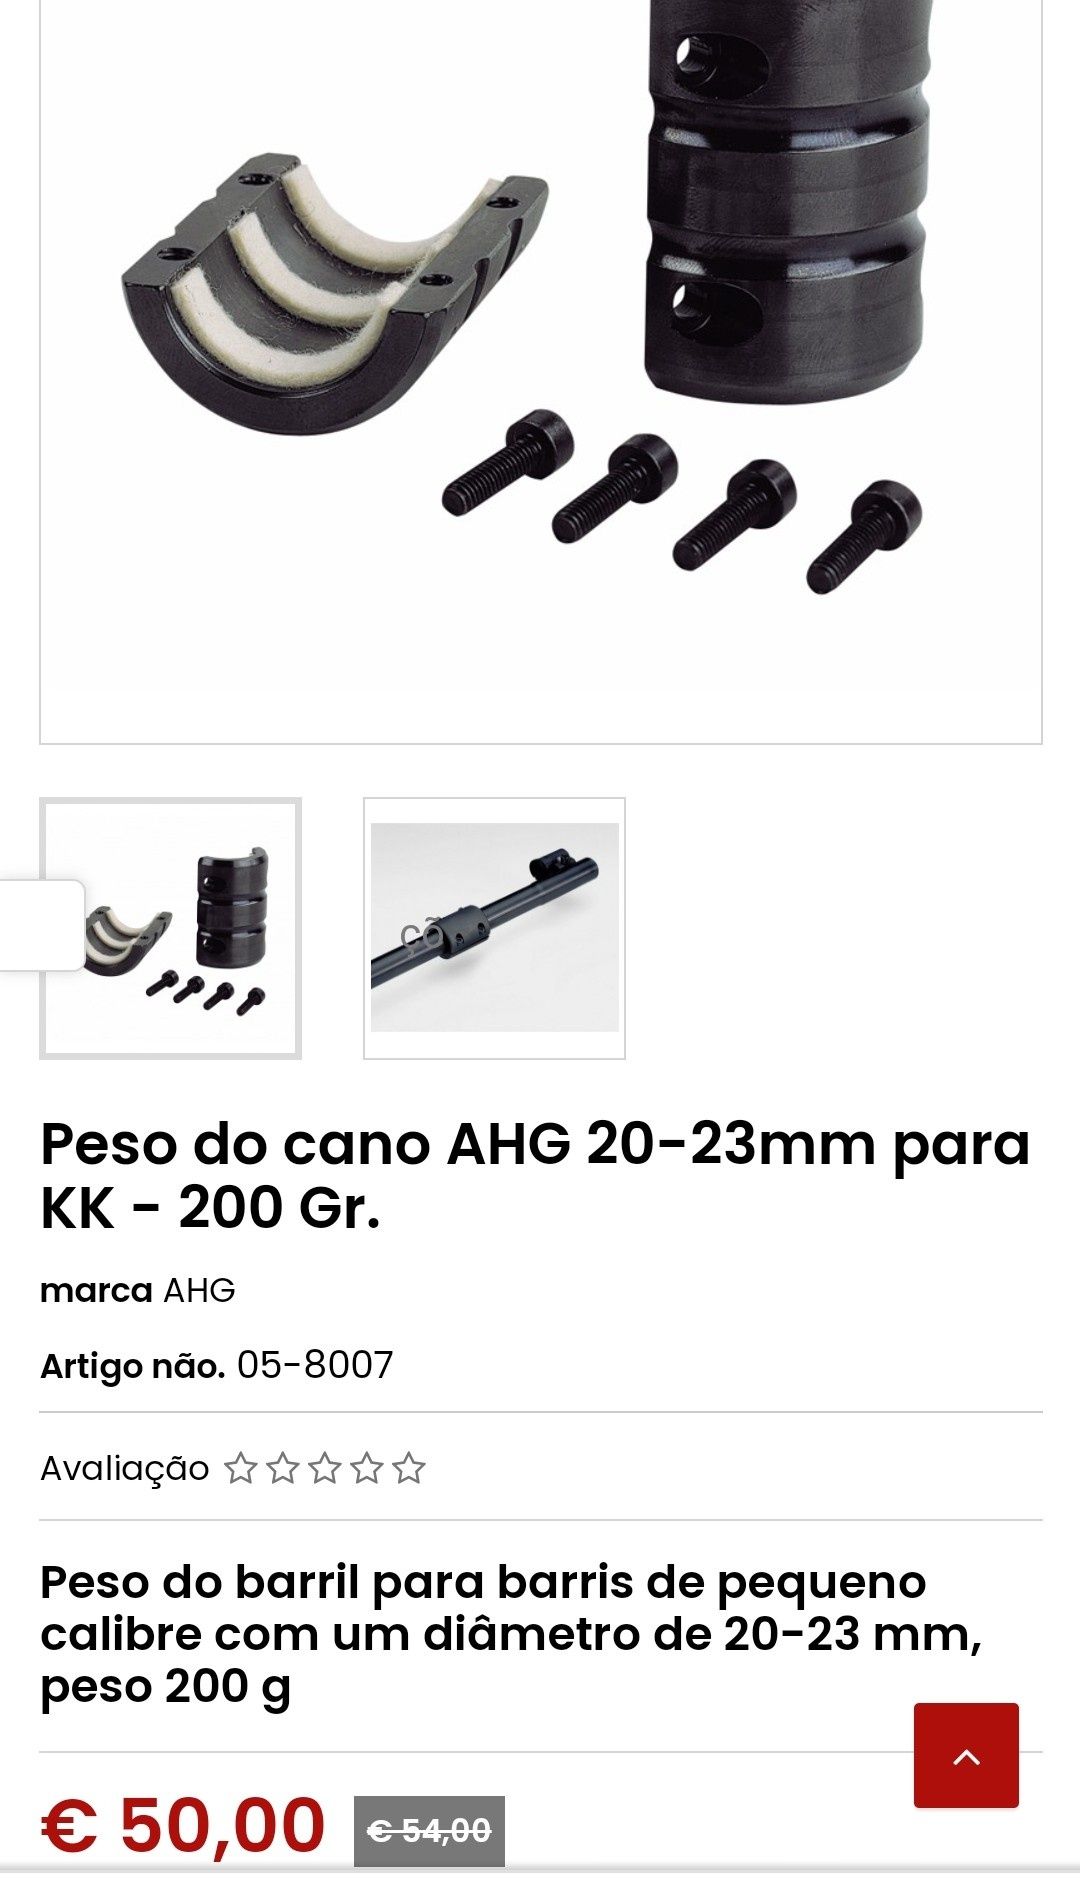 Peso do cano AHG 20-23mm para KK - 200 Gr.